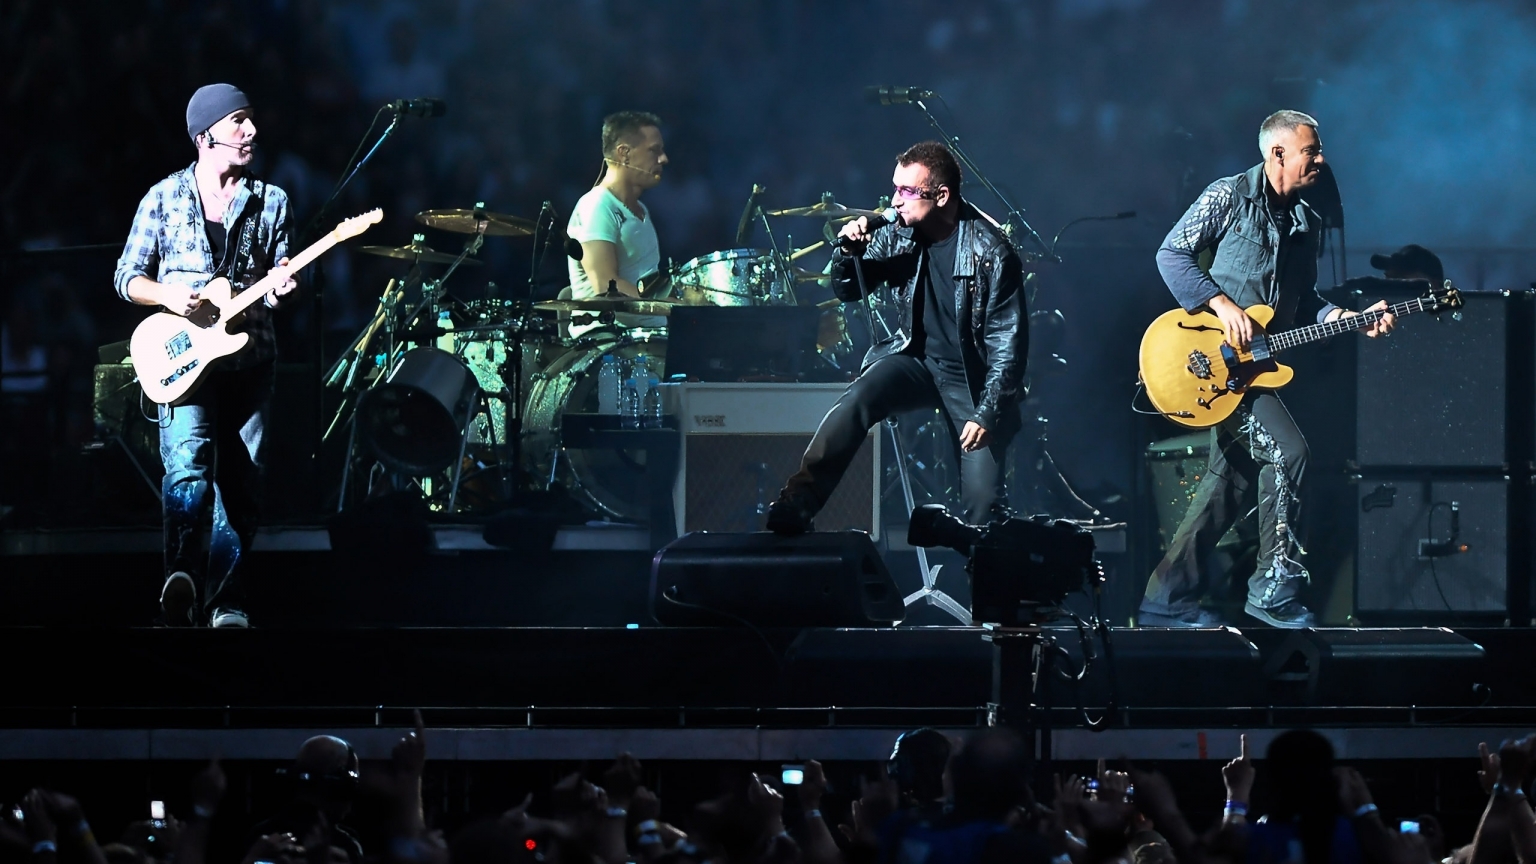 U2 band concert for 1536 x 864 HDTV resolution